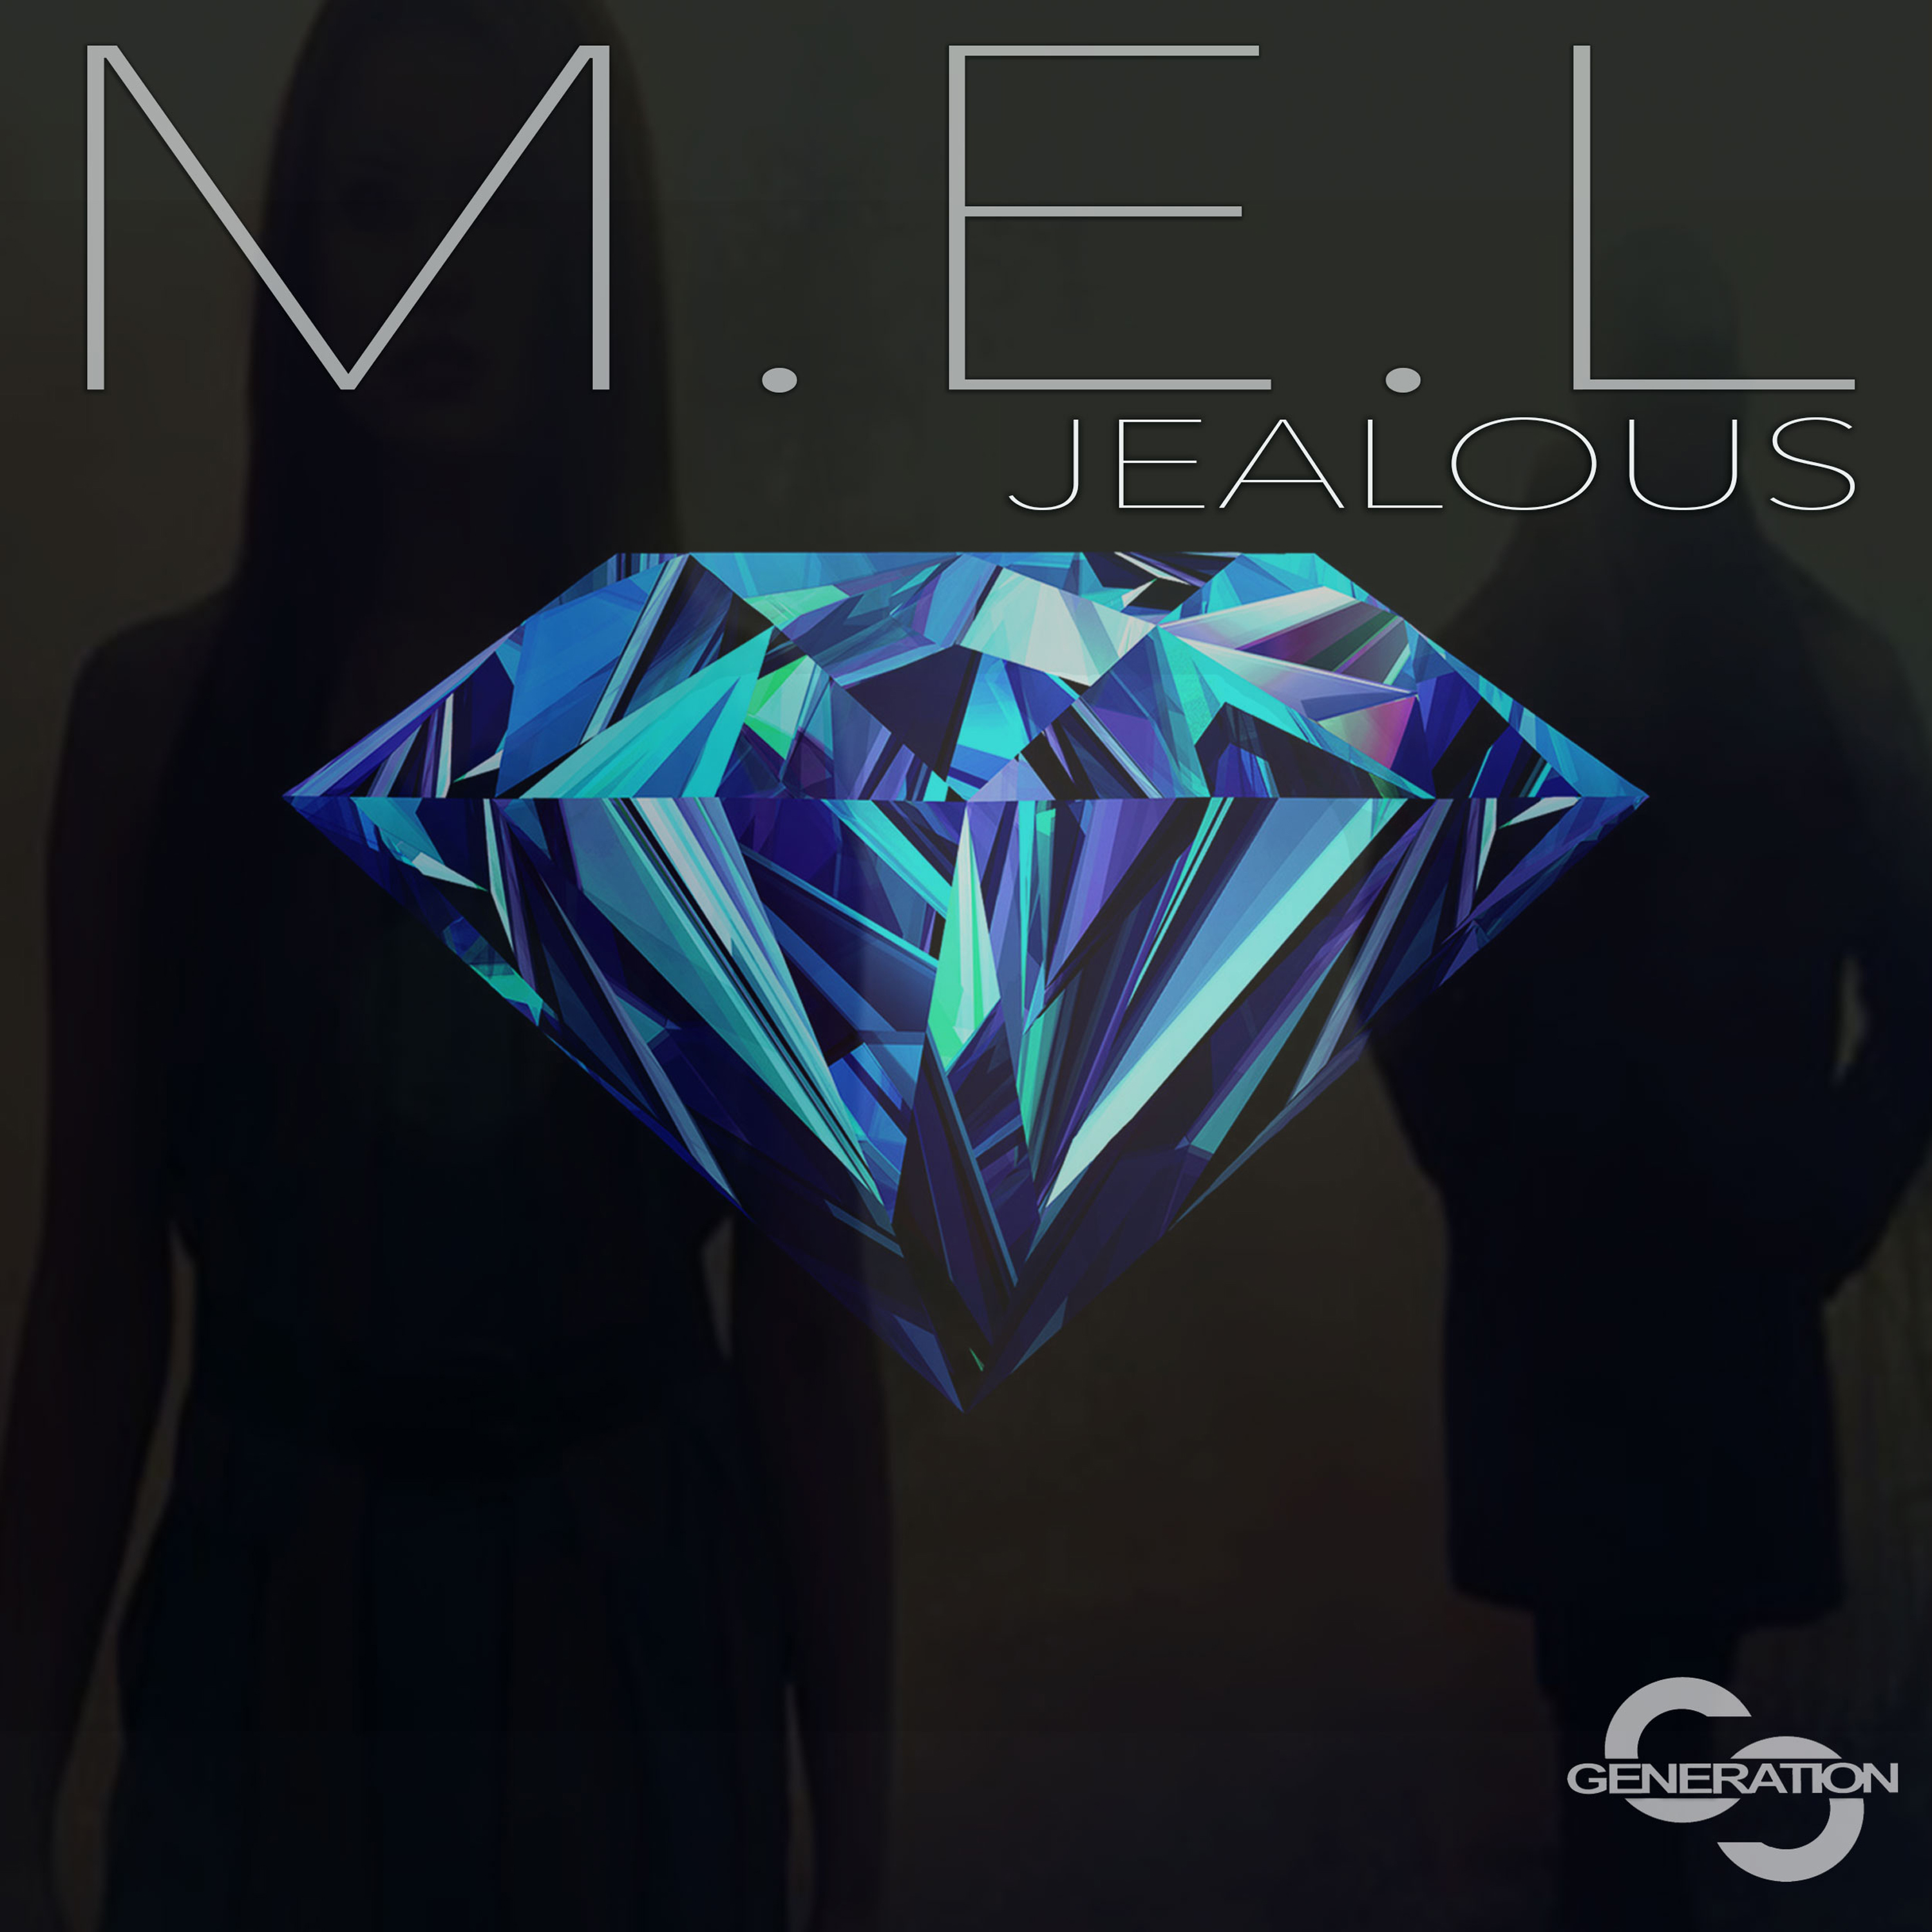 Jealous (Dave Aude Extended Mix)